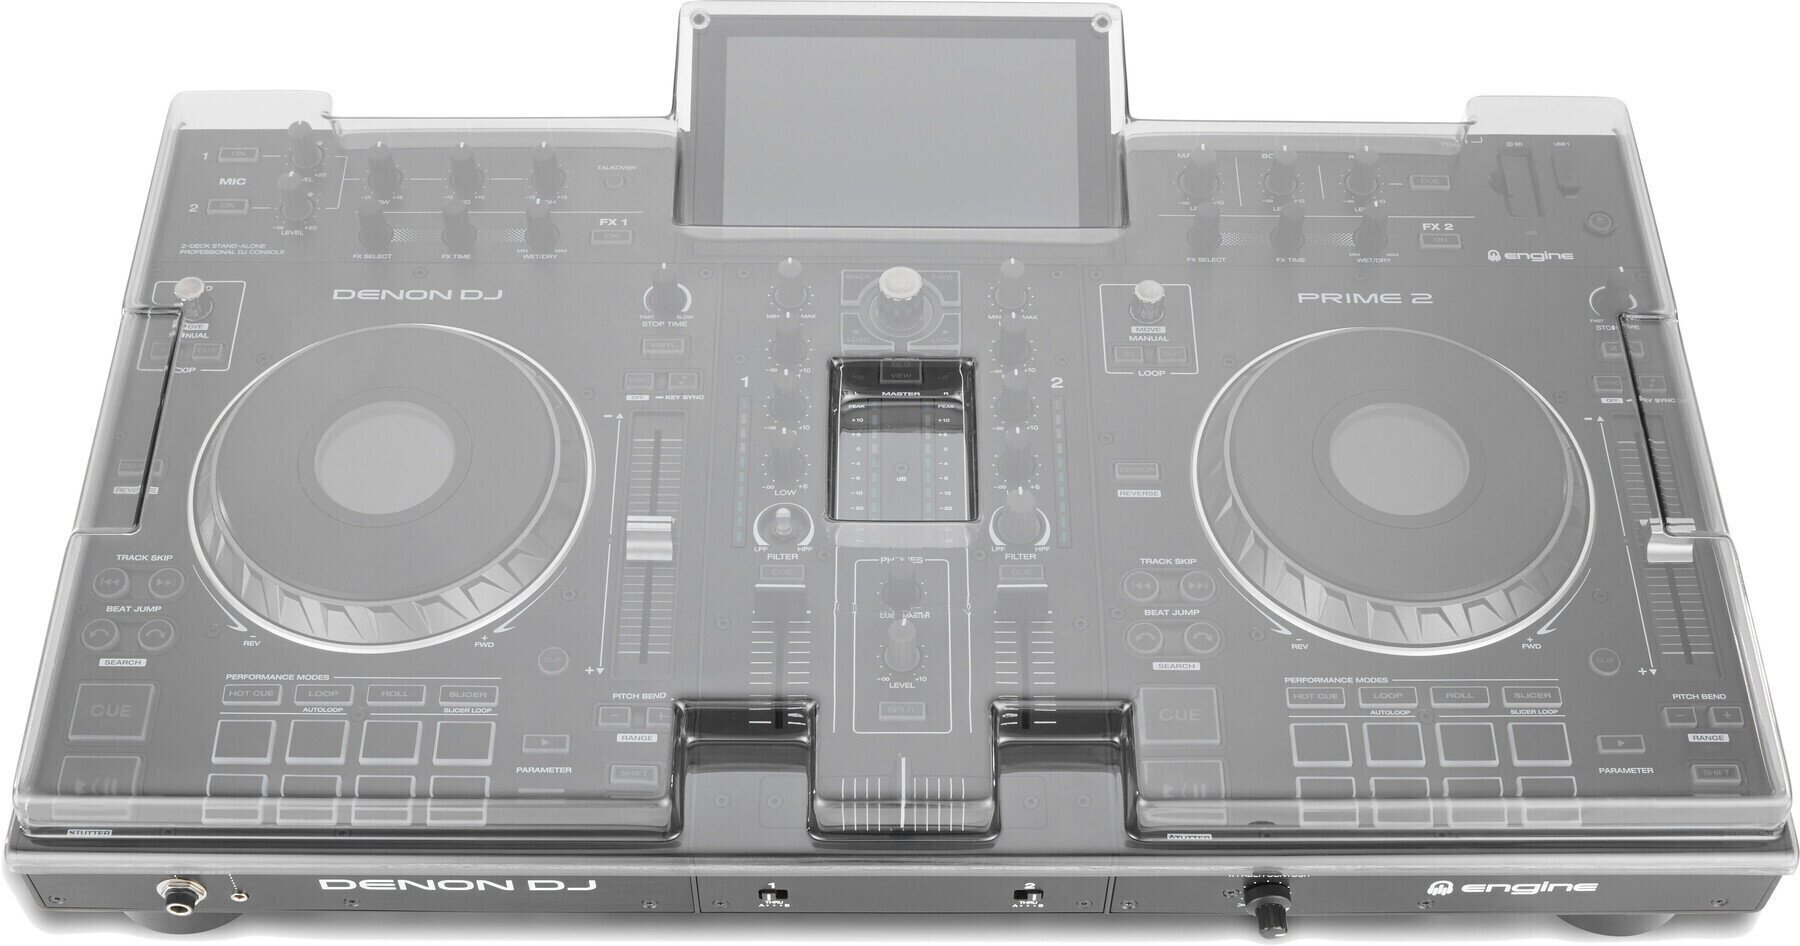 Beschermhoes voor DJ-controller Decksaver Denon DJ Prime 2